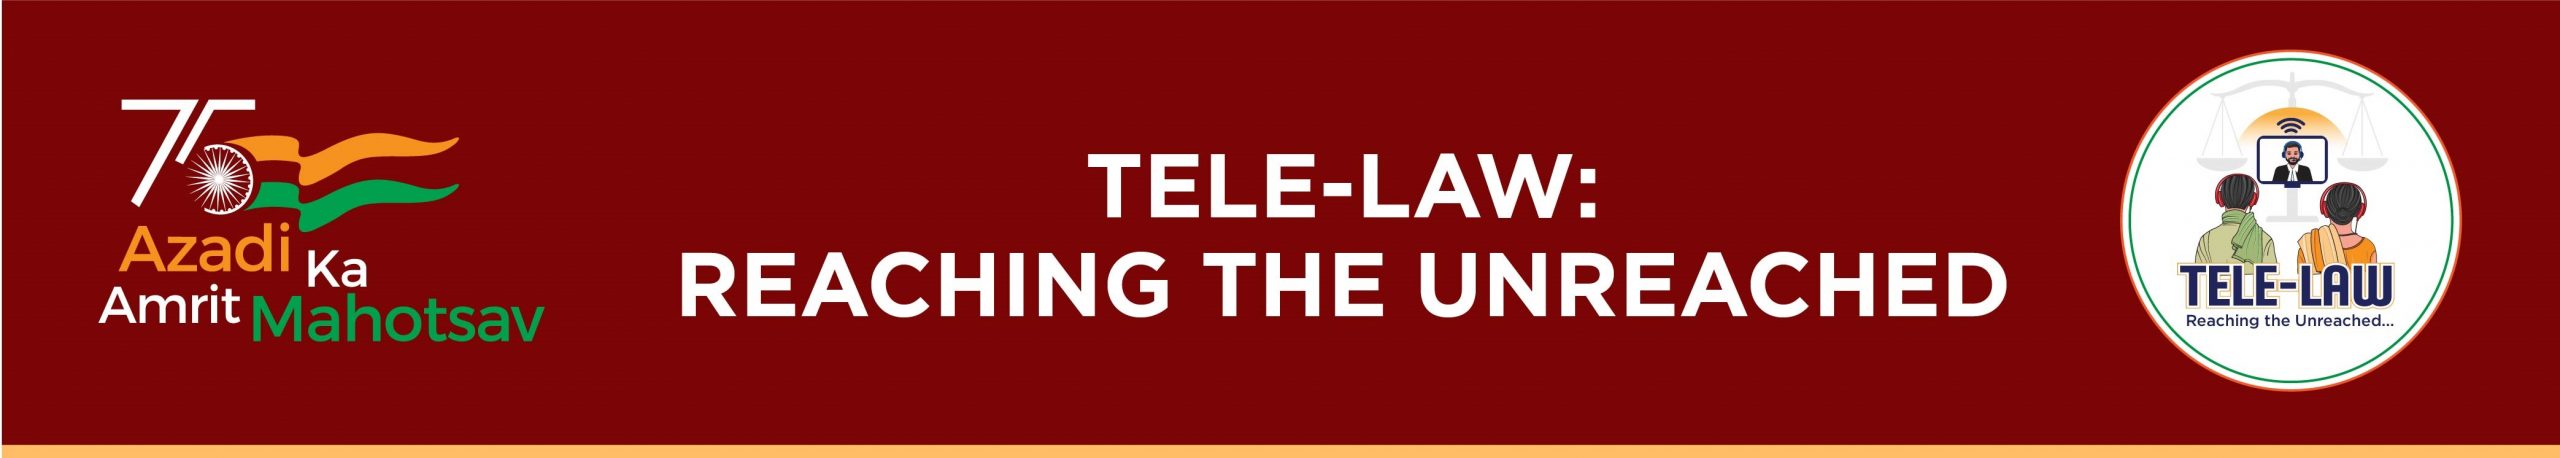 tele-law